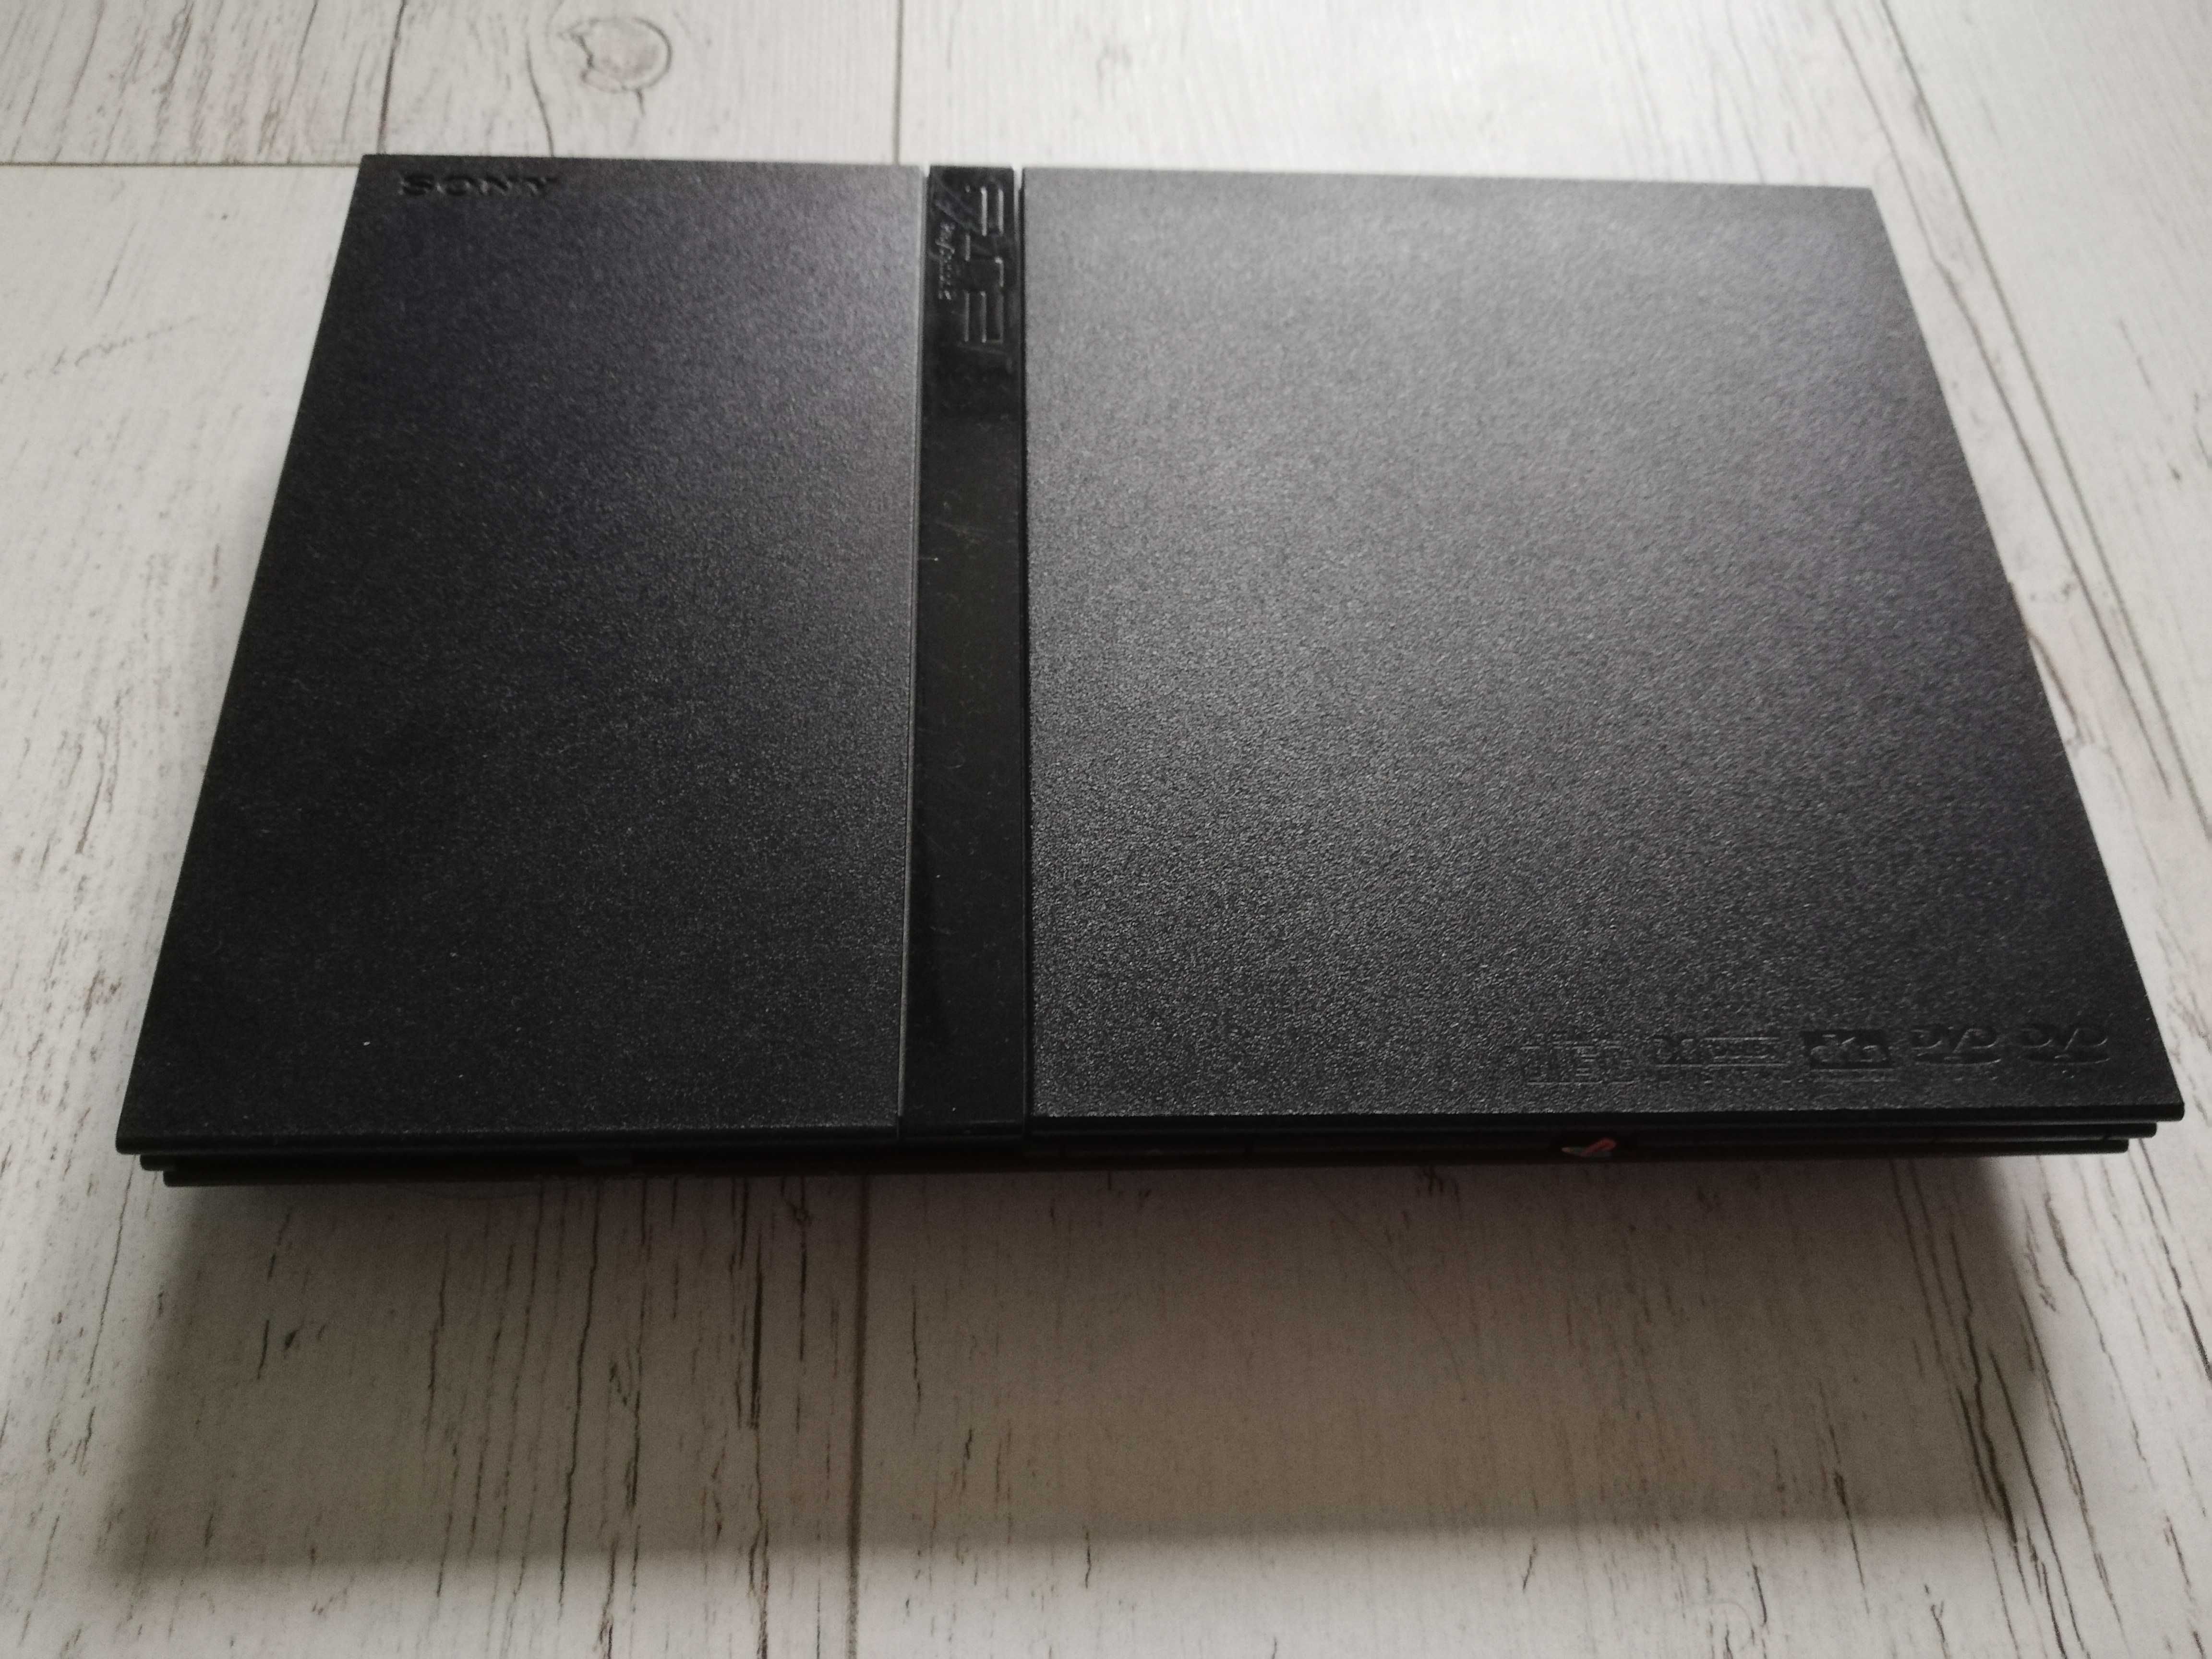 Konsola PlayStation 2 slim + pad + 2 memorki + kabel Component + 4 gry